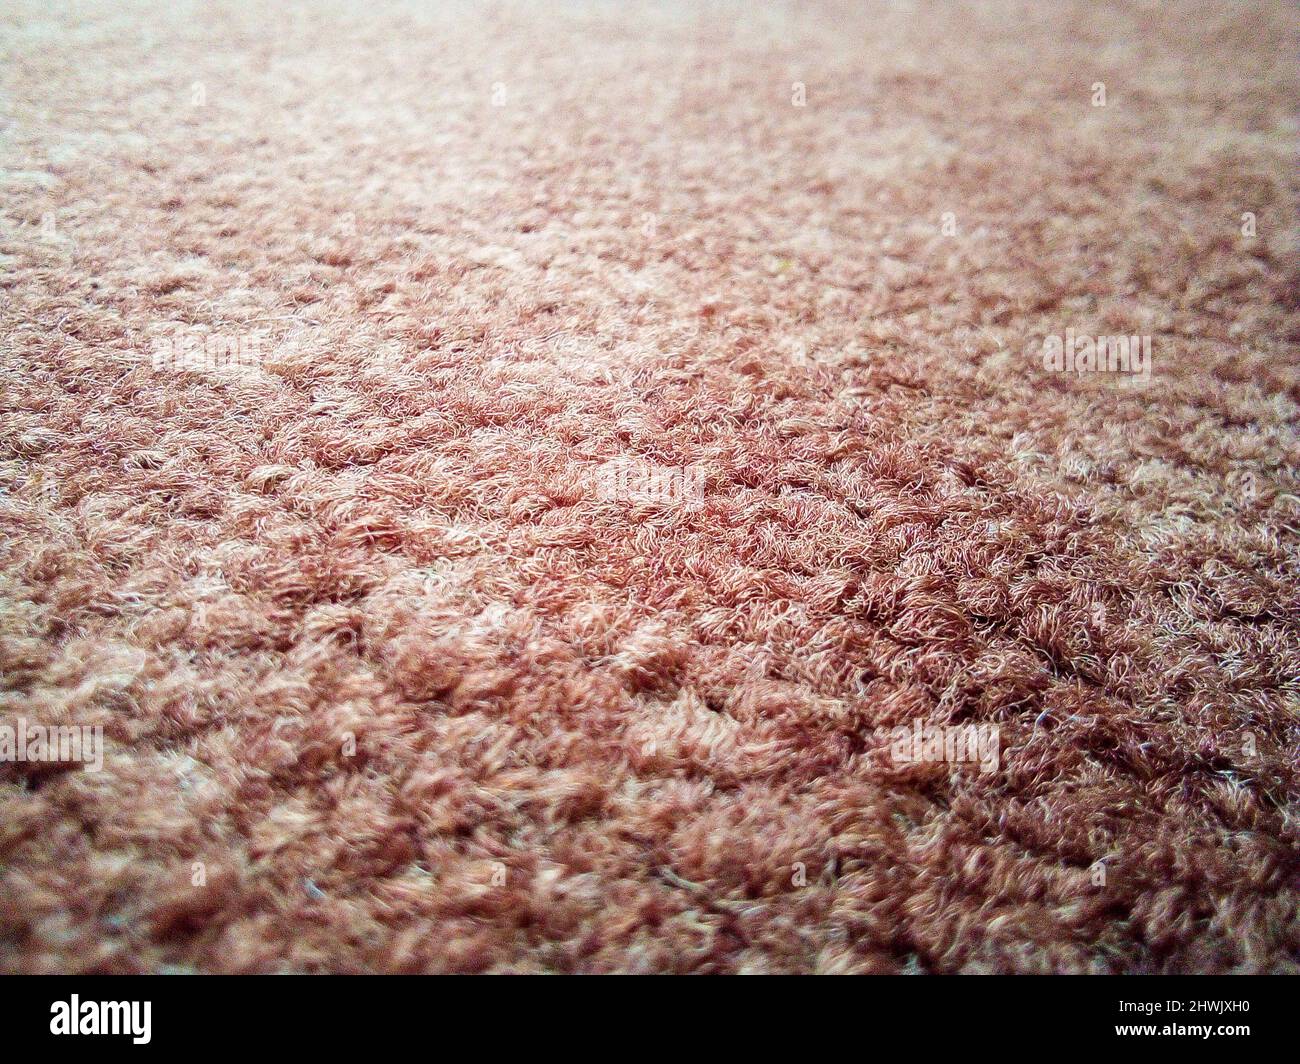 Texture of carpet fabric on the floor Stock Photo